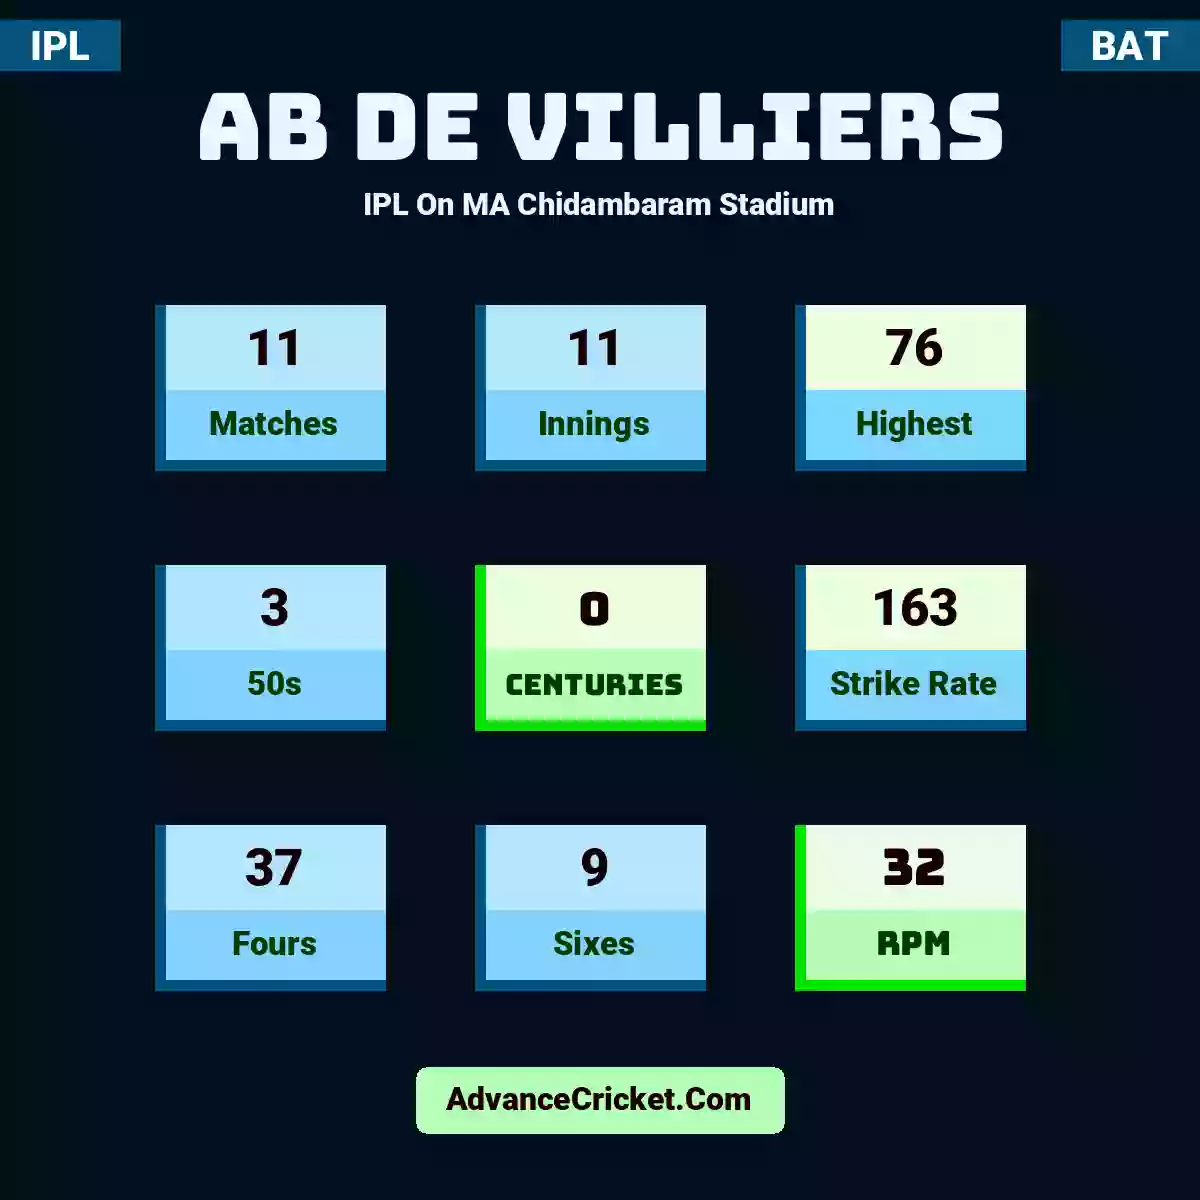 AB de Villiers IPL  On MA Chidambaram Stadium, AB de Villiers played 11 matches, scored 76 runs as highest, 3 half-centuries, and 0 centuries, with a strike rate of 163. A.Villiers hit 37 fours and 9 sixes, with an RPM of 32.